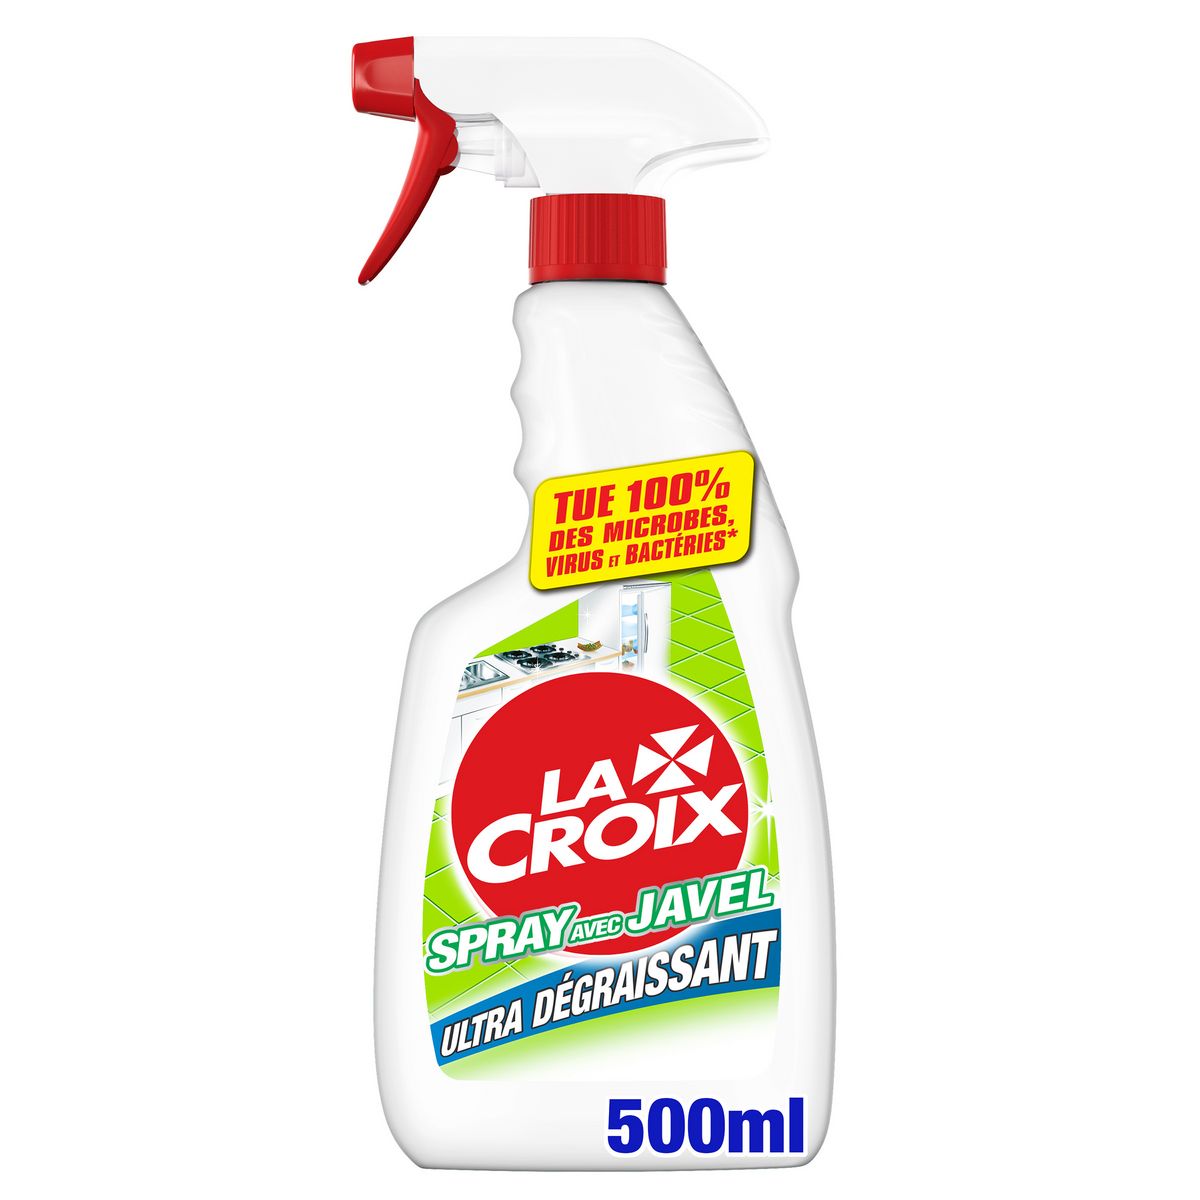 LA CROIX Spray nettoyant ménager désinfectant avec javel 500ml